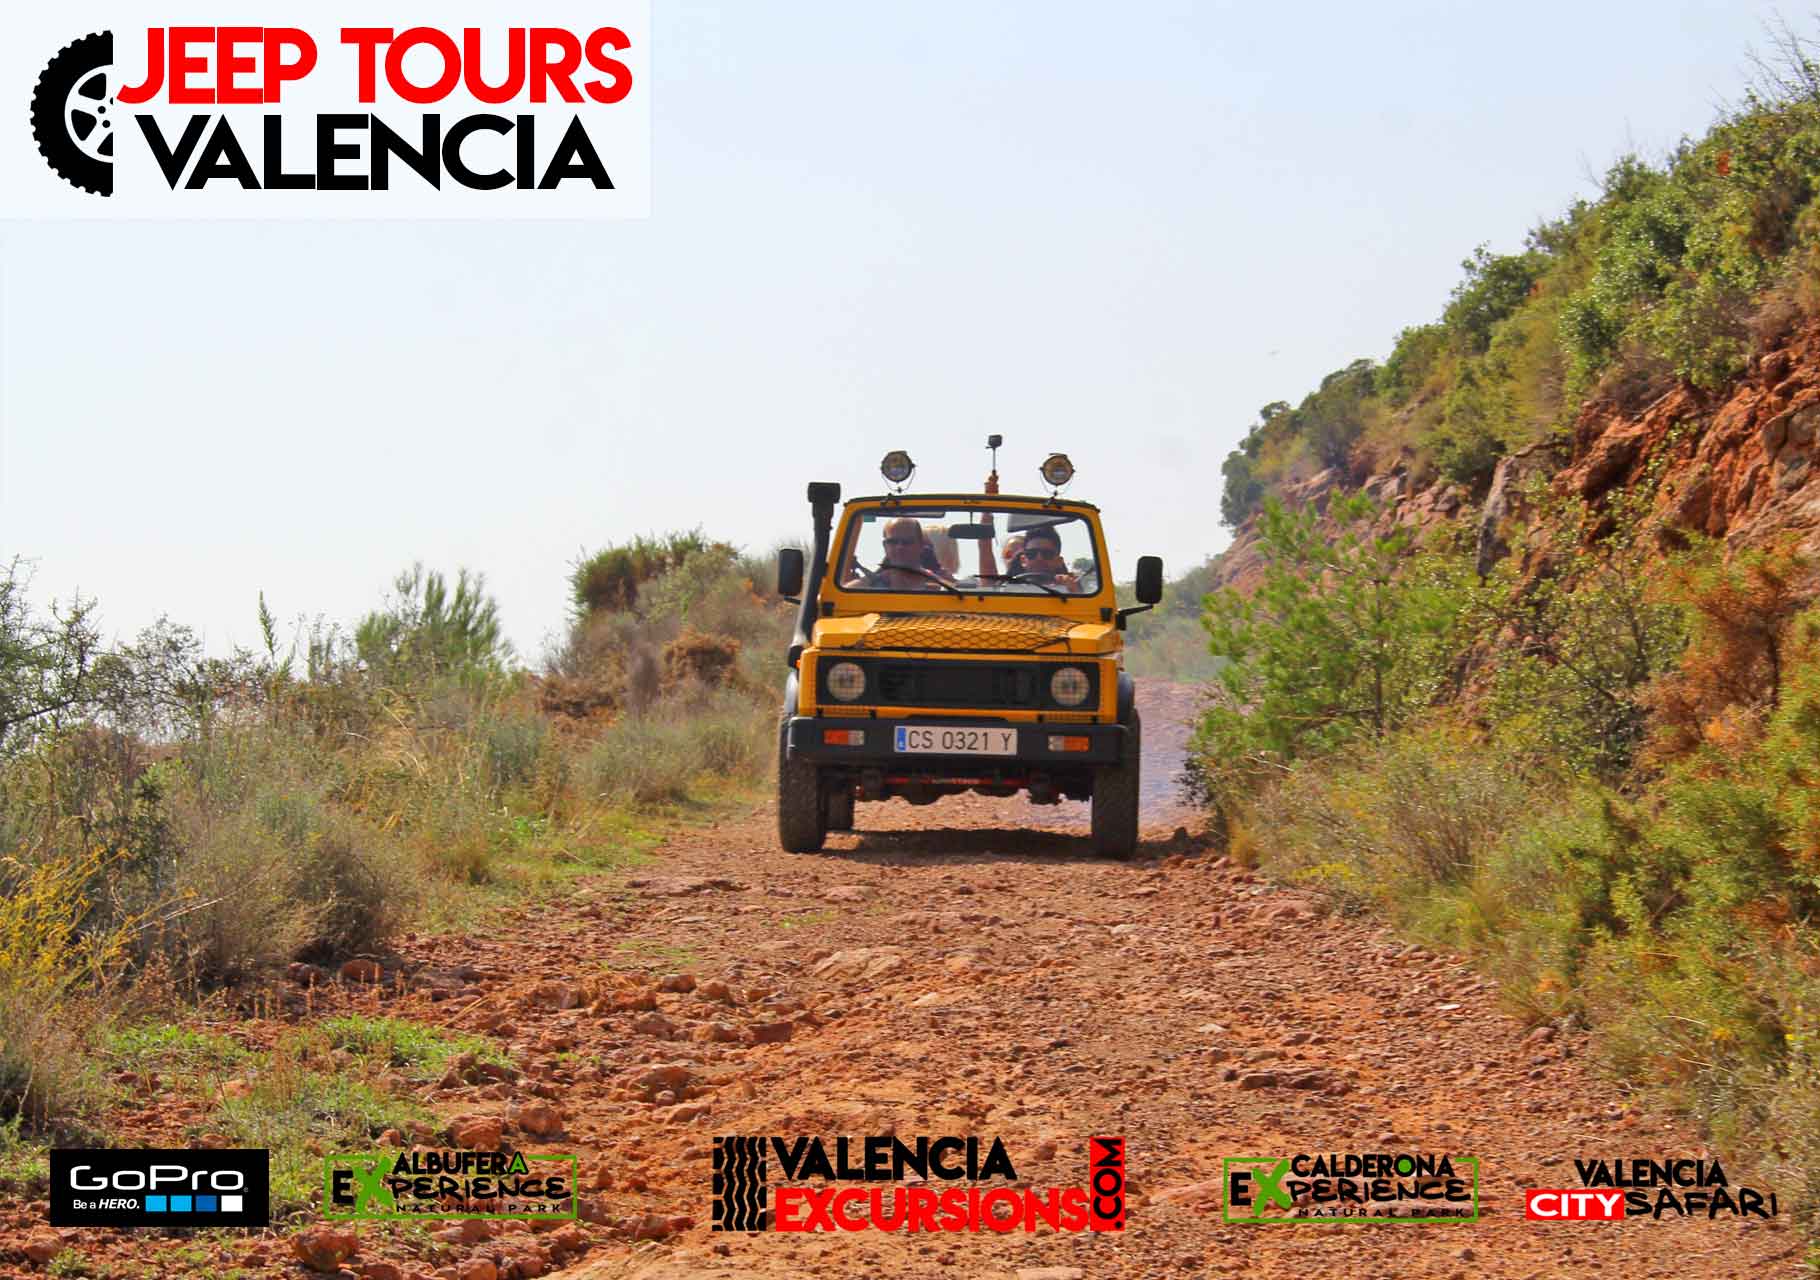 visit Valencia national parks